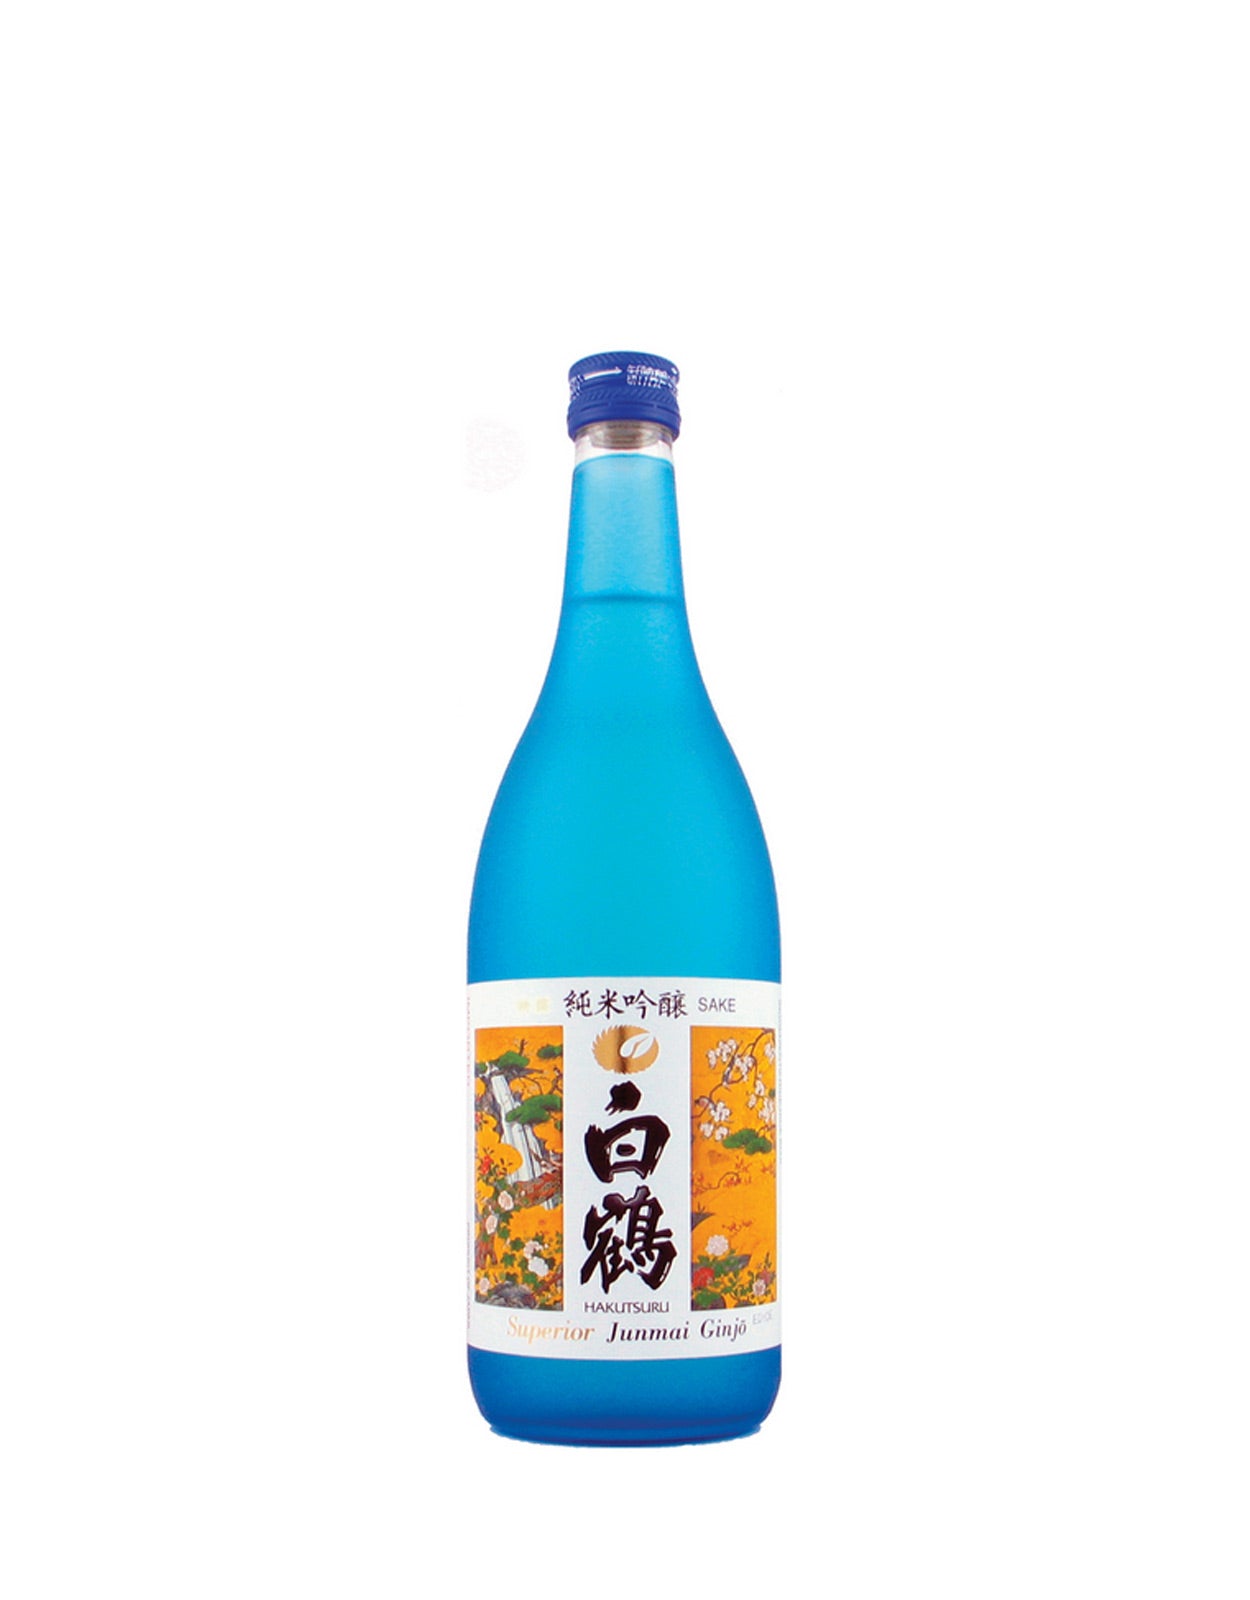 Hakutsuru Superior Junmai Ginjo Sake - 300 ml